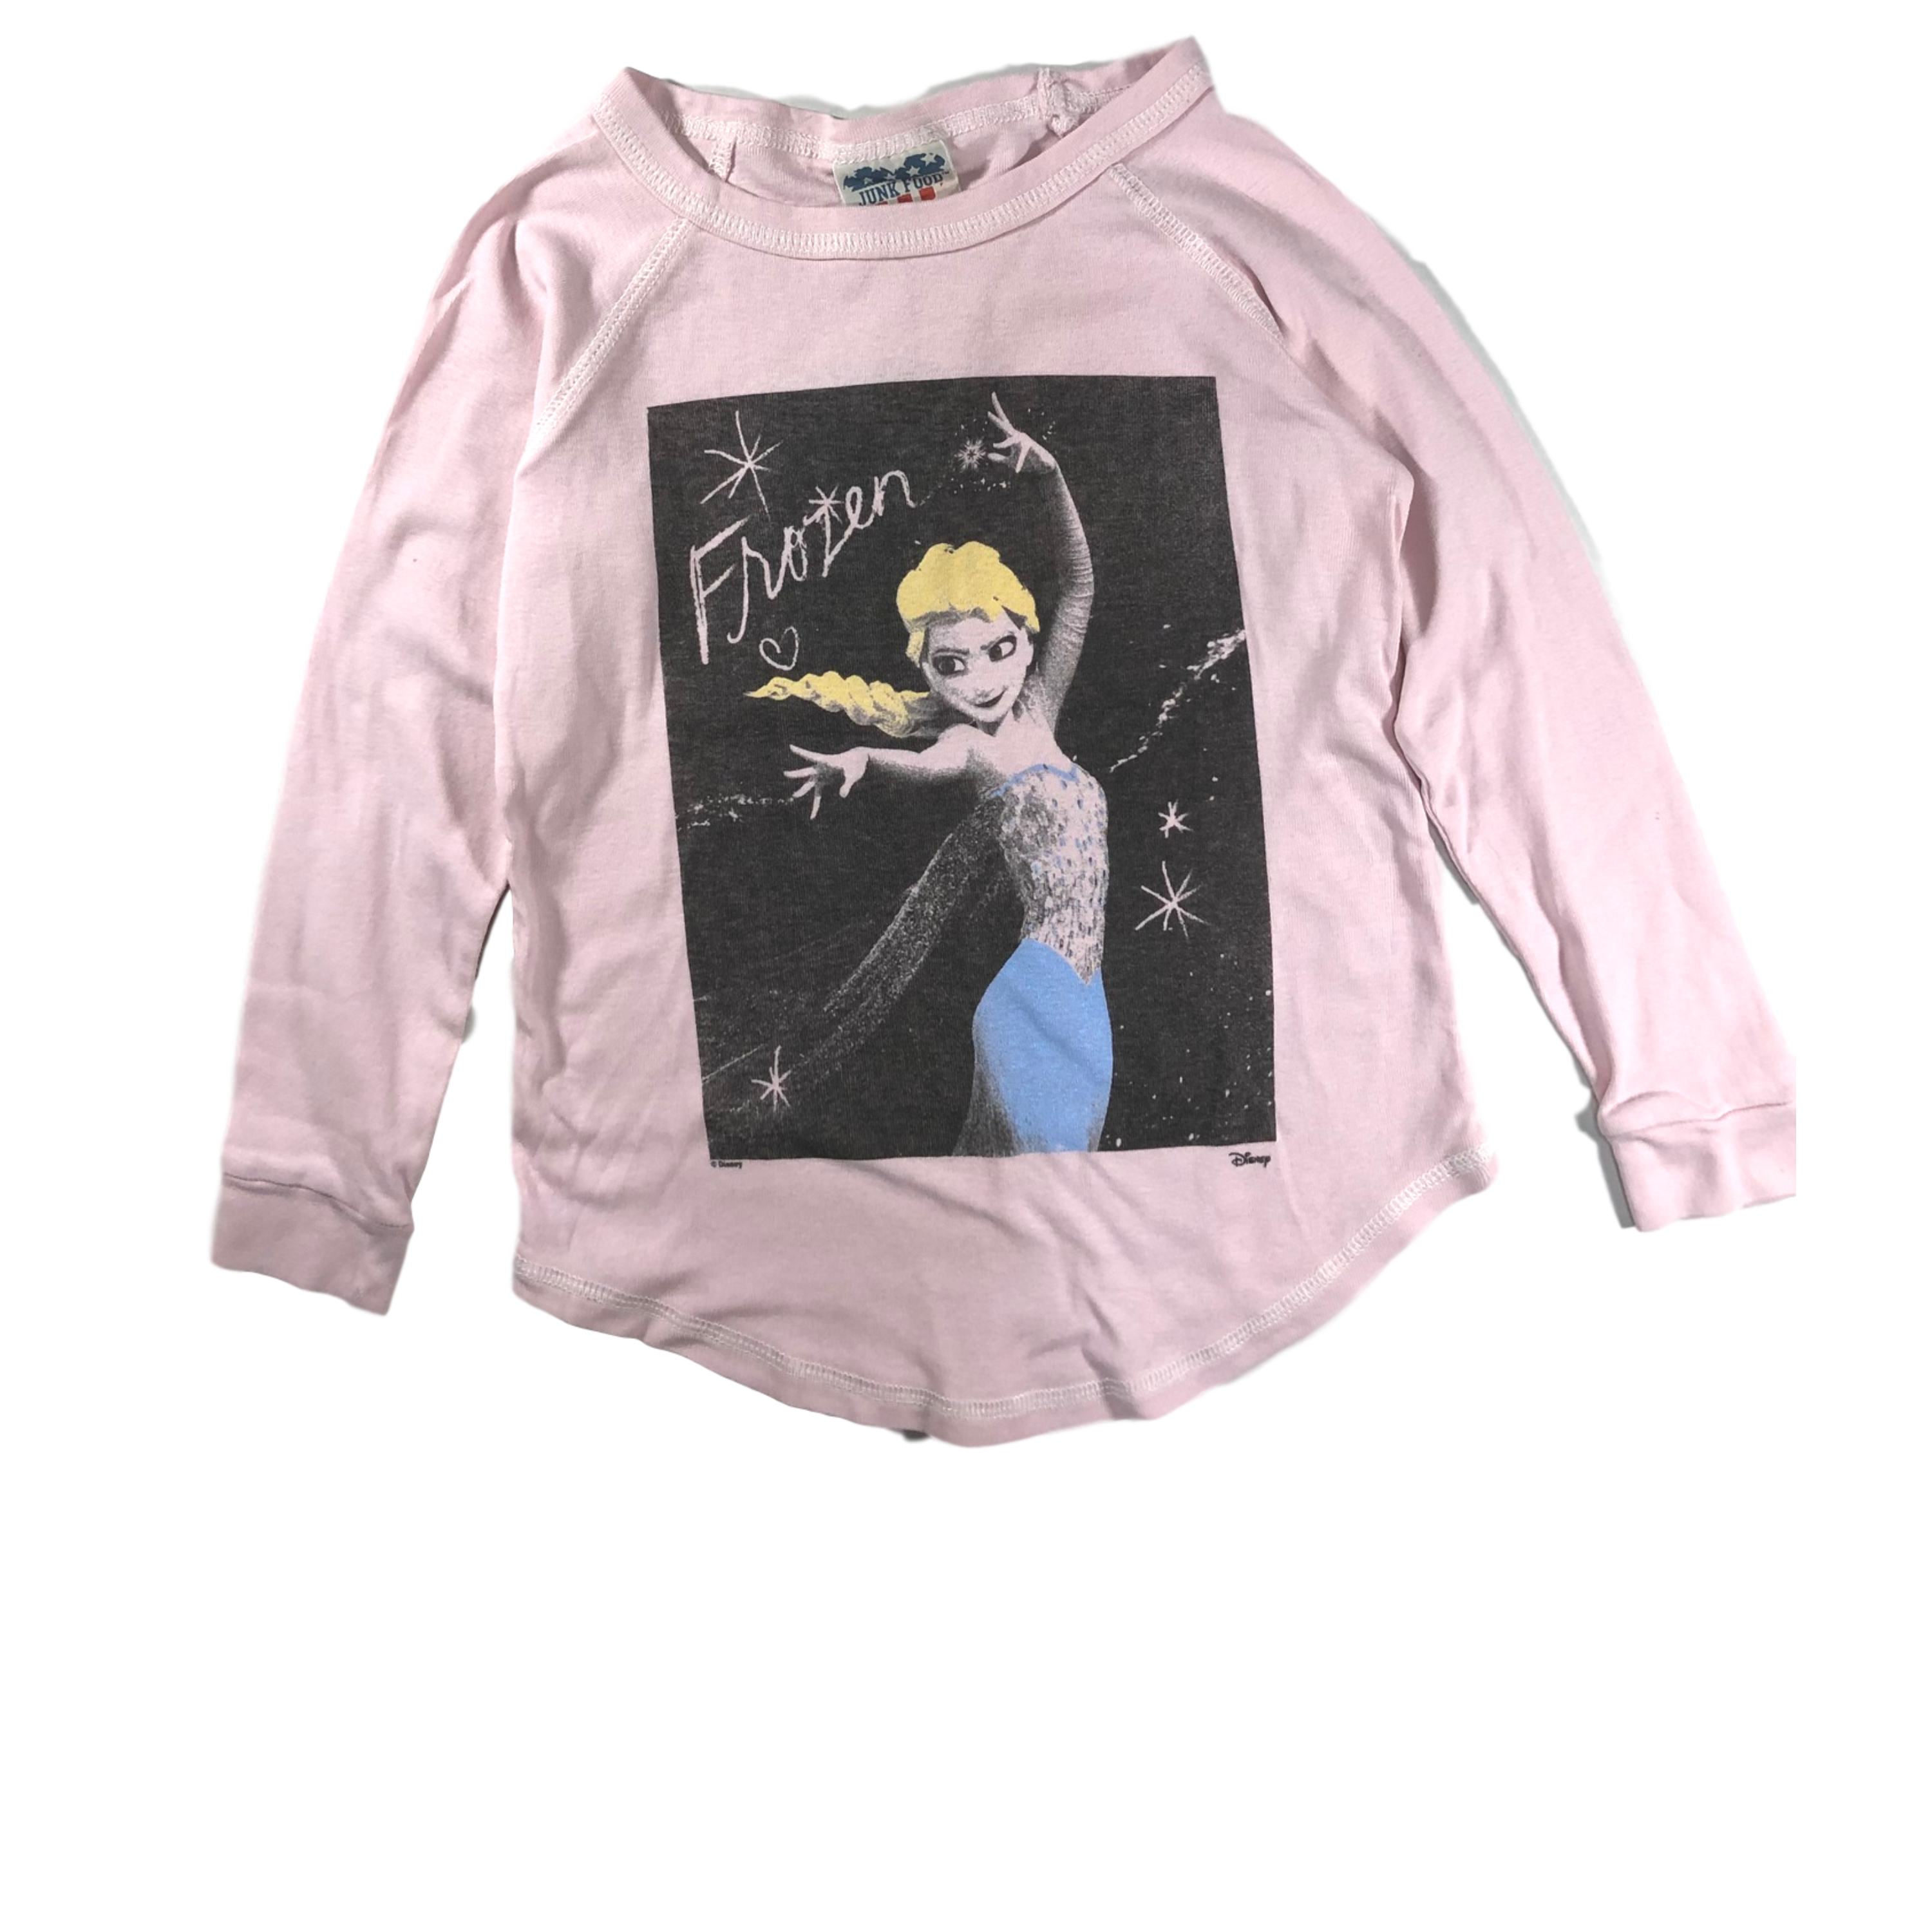 Disney Junior Girl's Disney Frozen Elsa long sleeve Top Tee shirt T-shirt - Pink - image 1 of 1